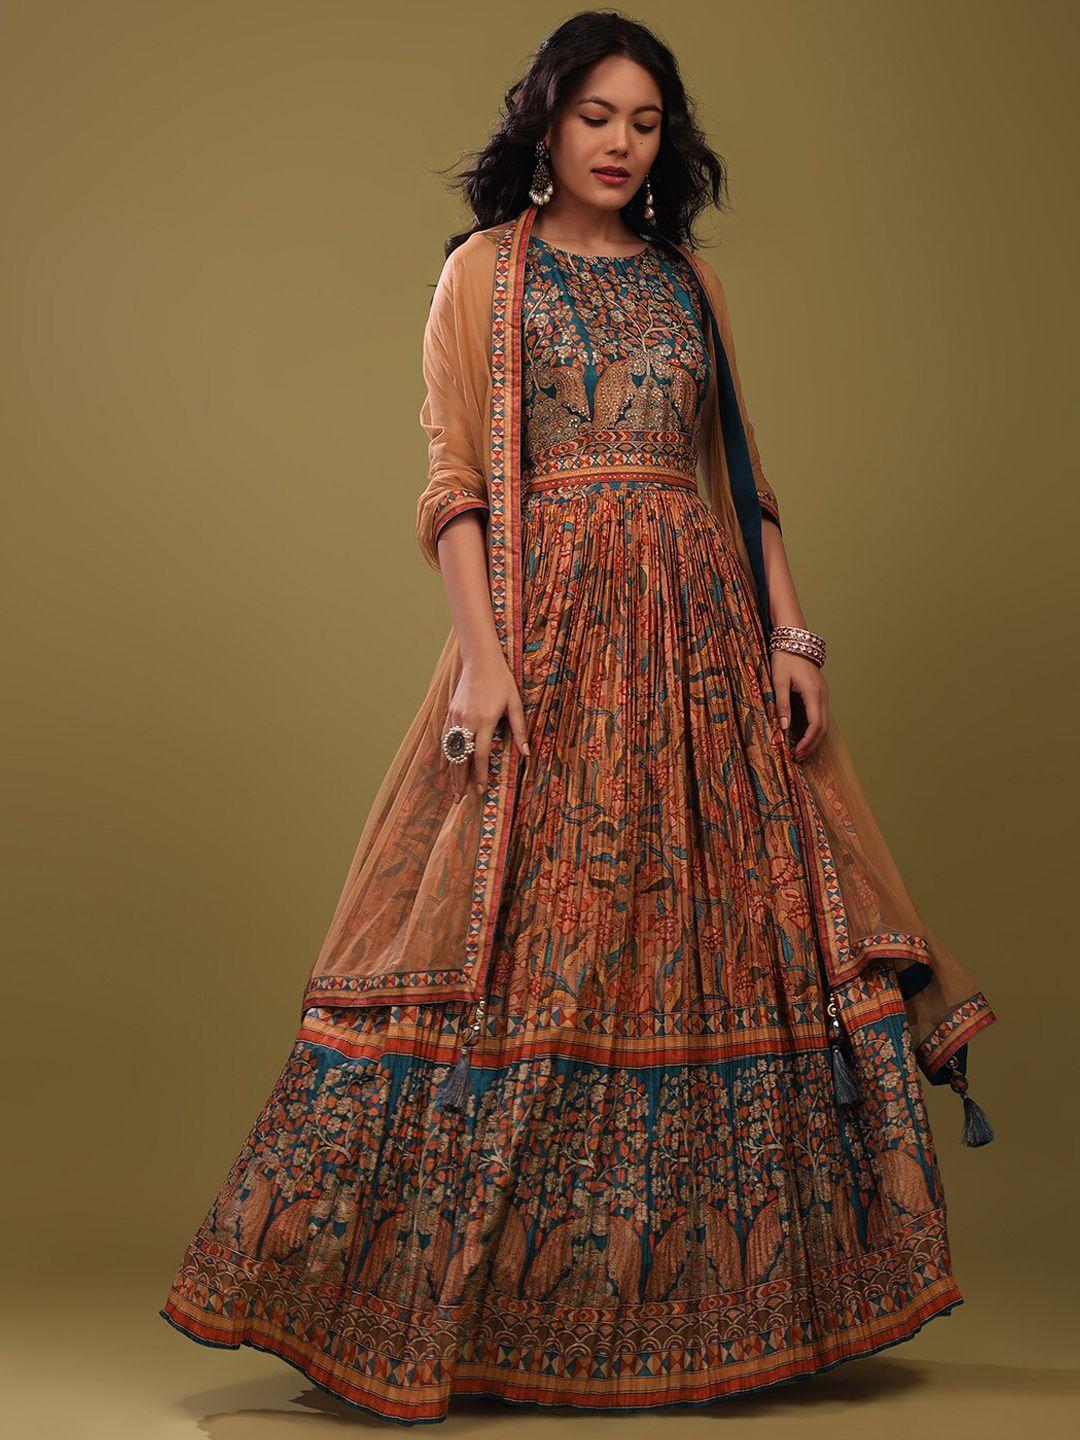 kalki fashion ethnic motifs printed ethnic dress with dupatta